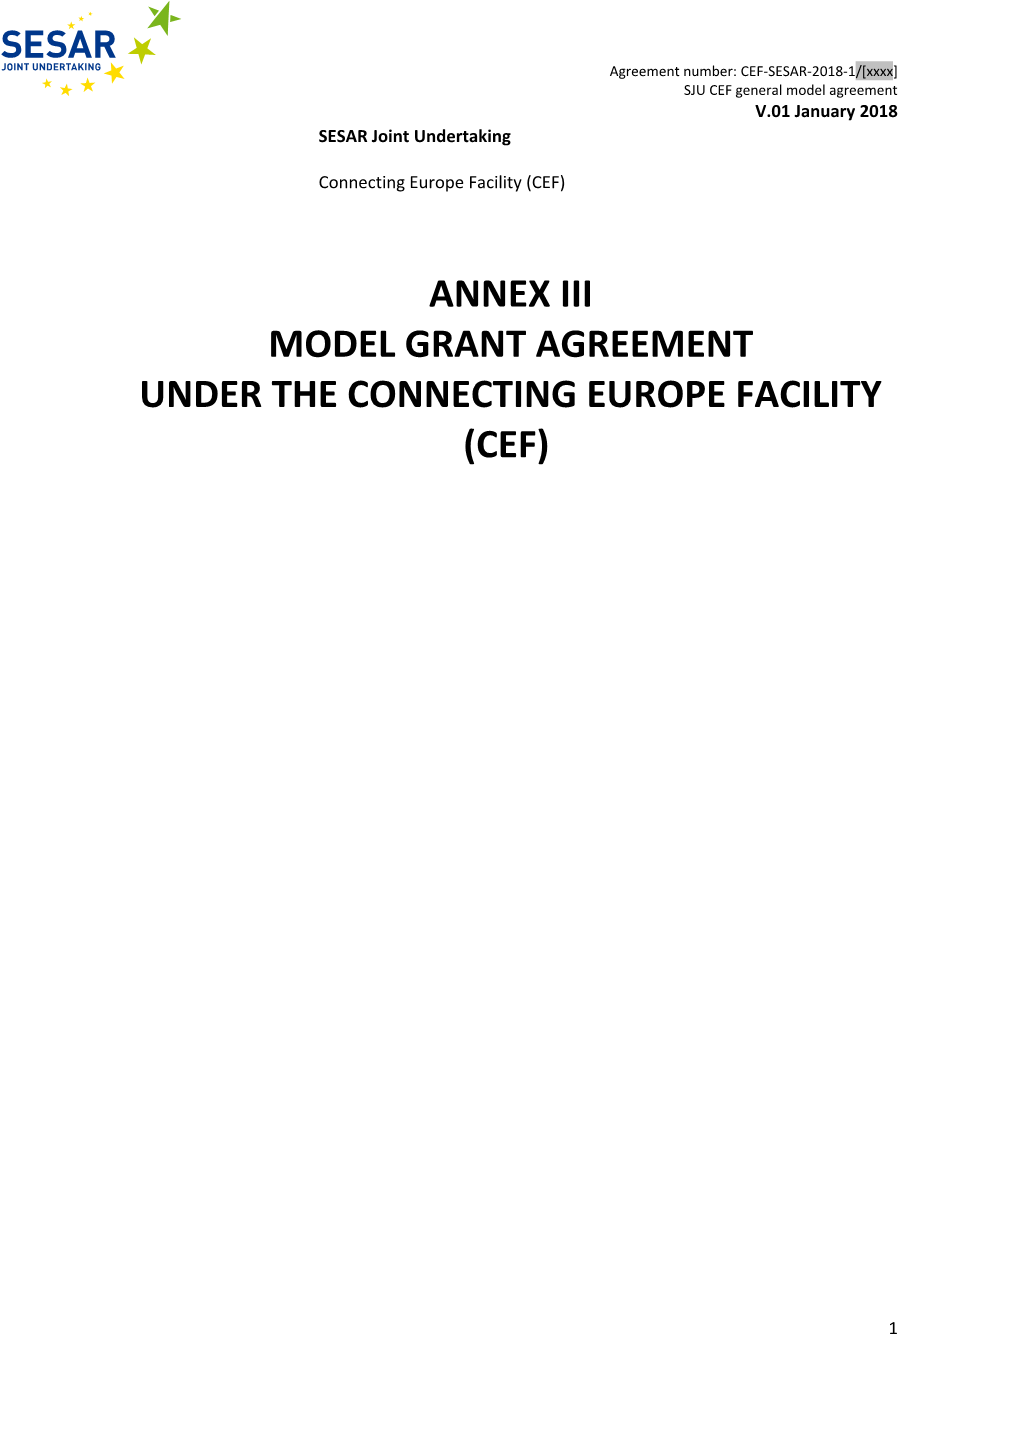 Agreement Number: CEF-SESAR-2018-1/ Xxxx